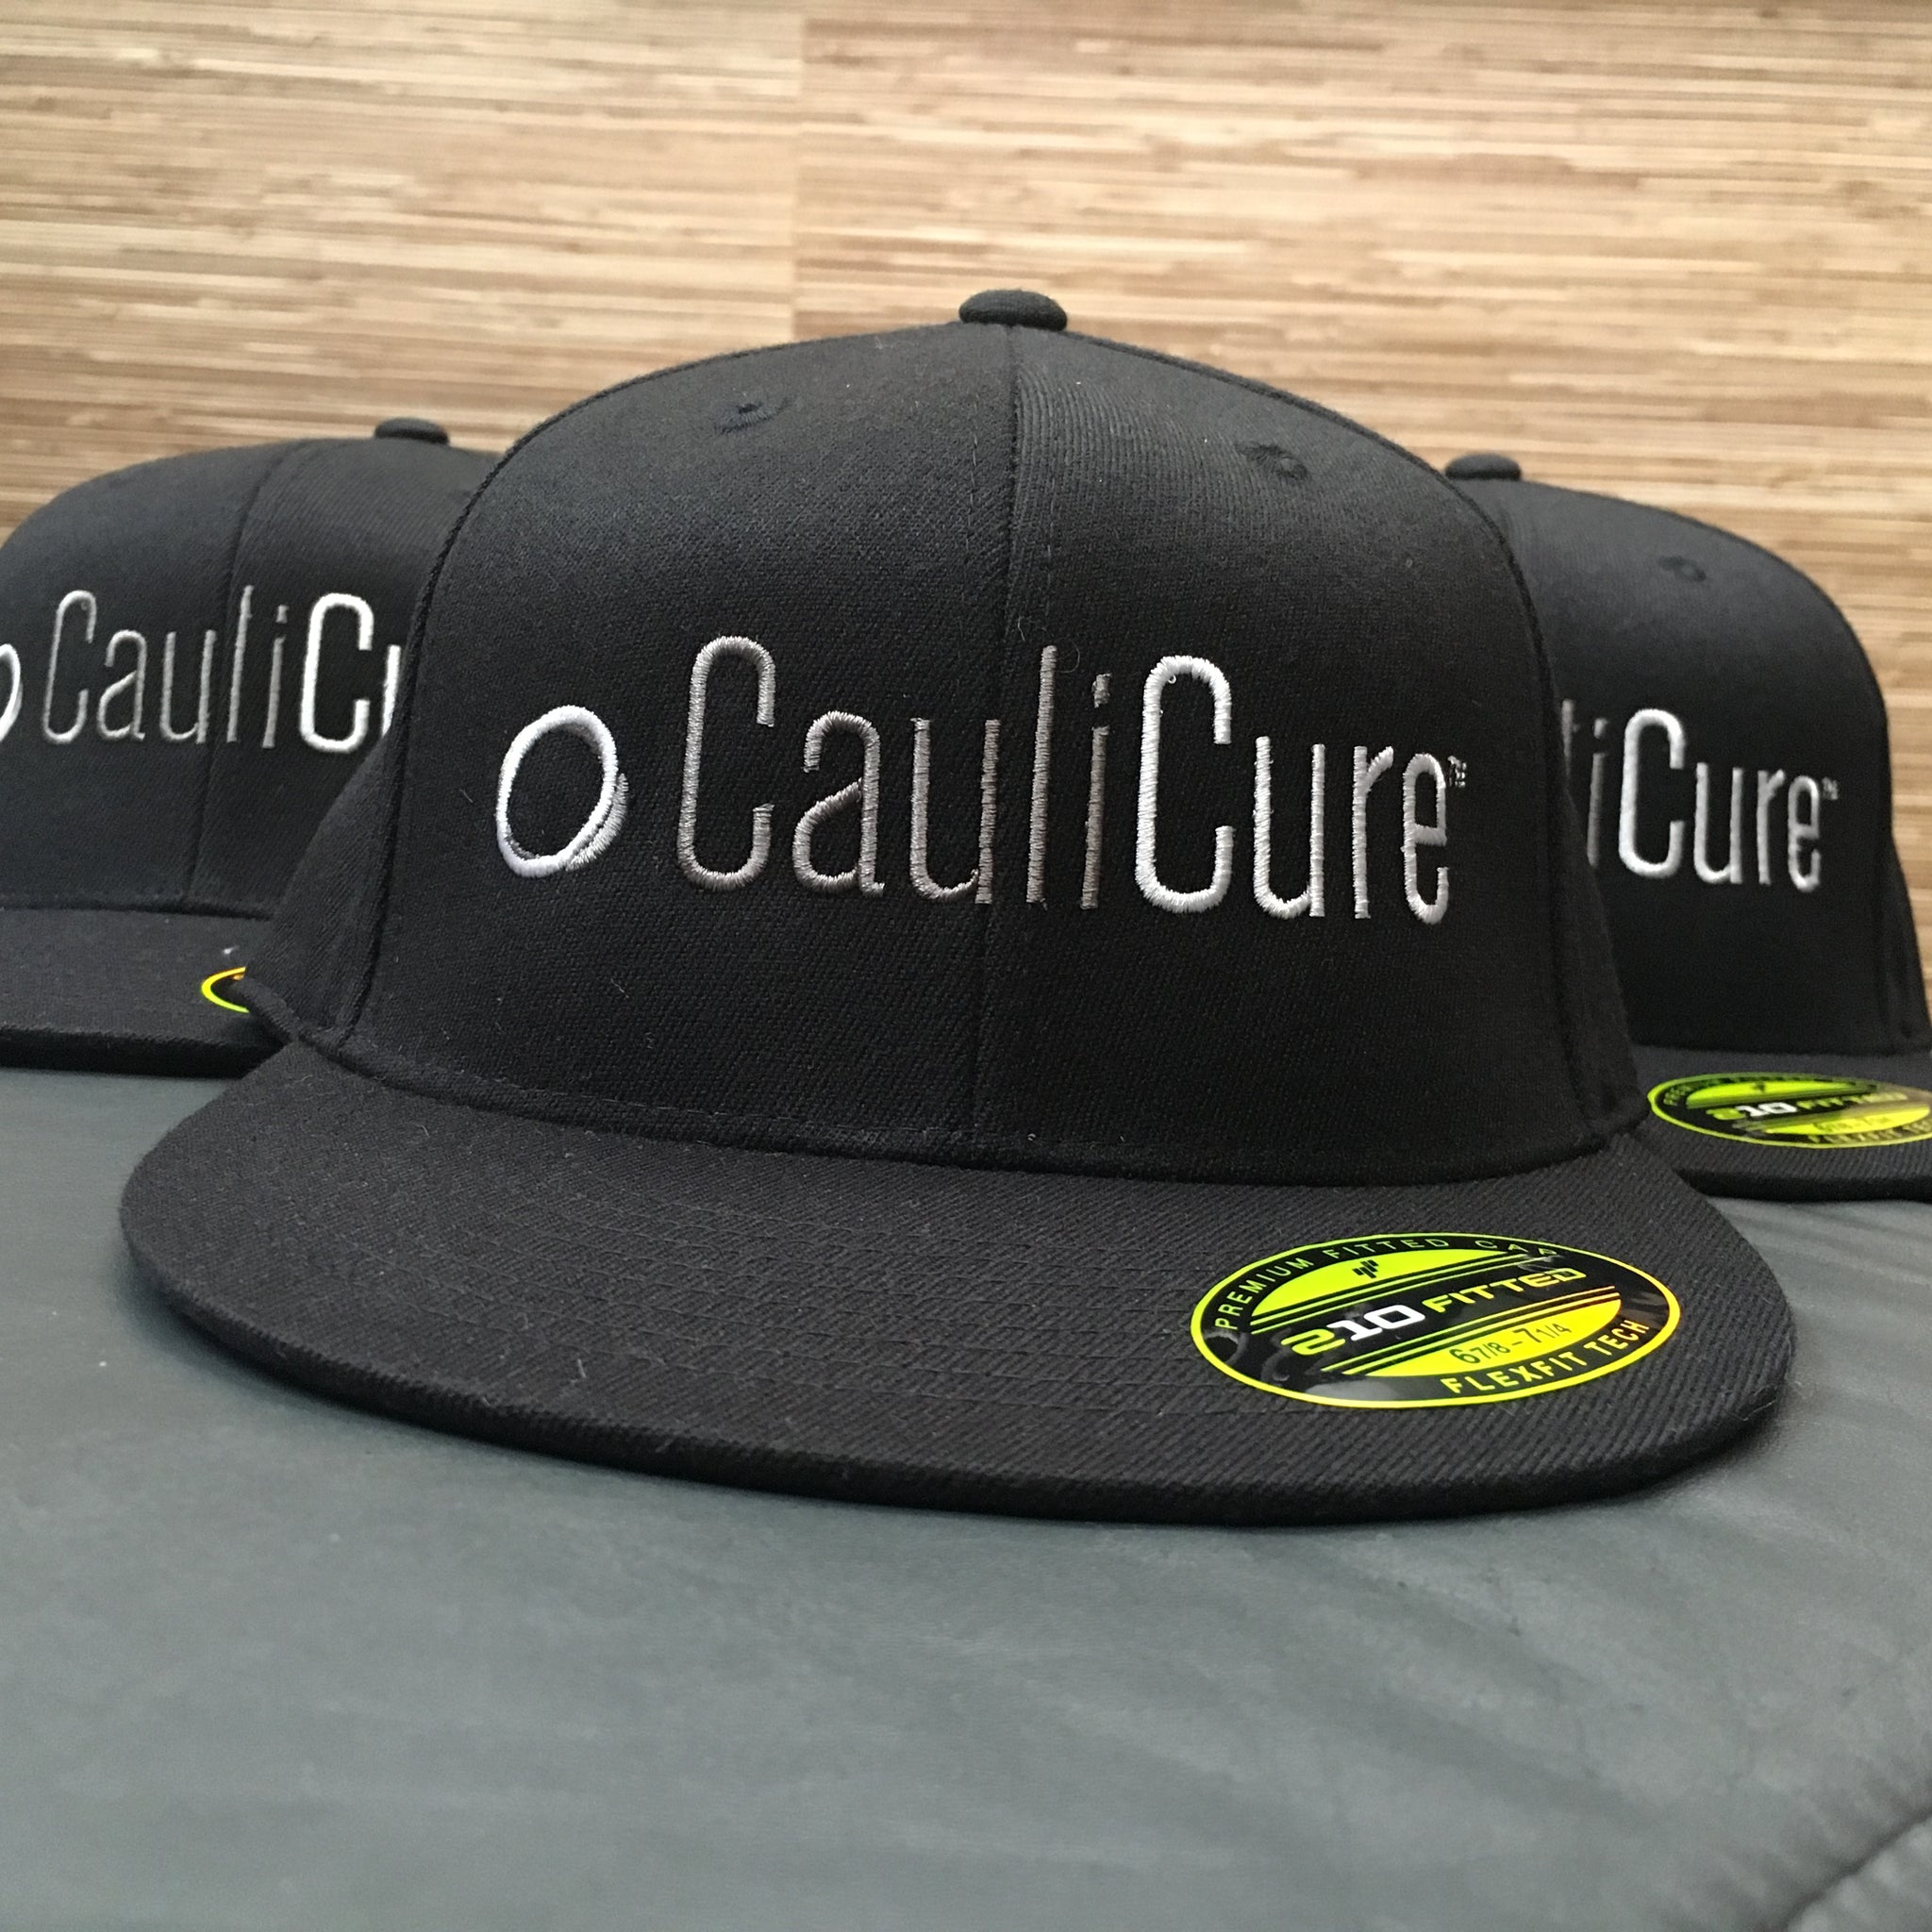 Caulicure Cauliflower ear prevention solution flat bill hat